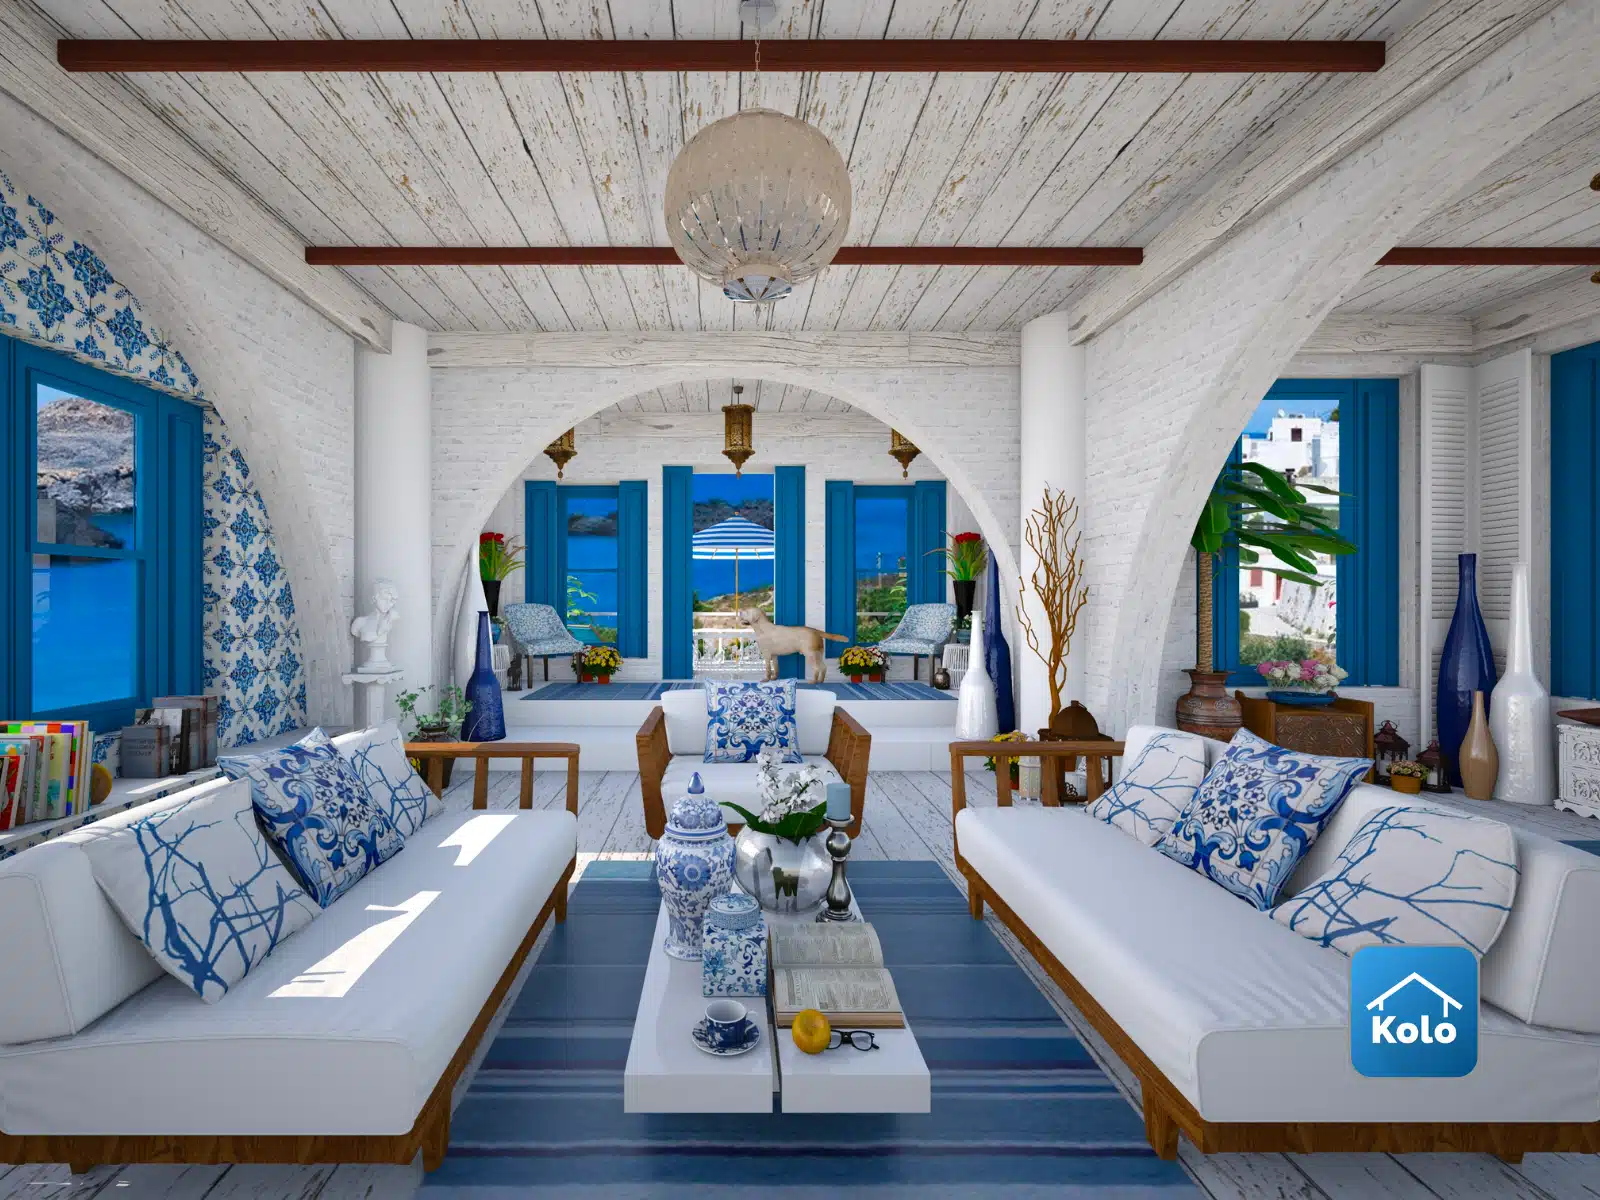 6 Modern Mediterranean Interior Design Ideas | A Guide To Sunny And Serene Home